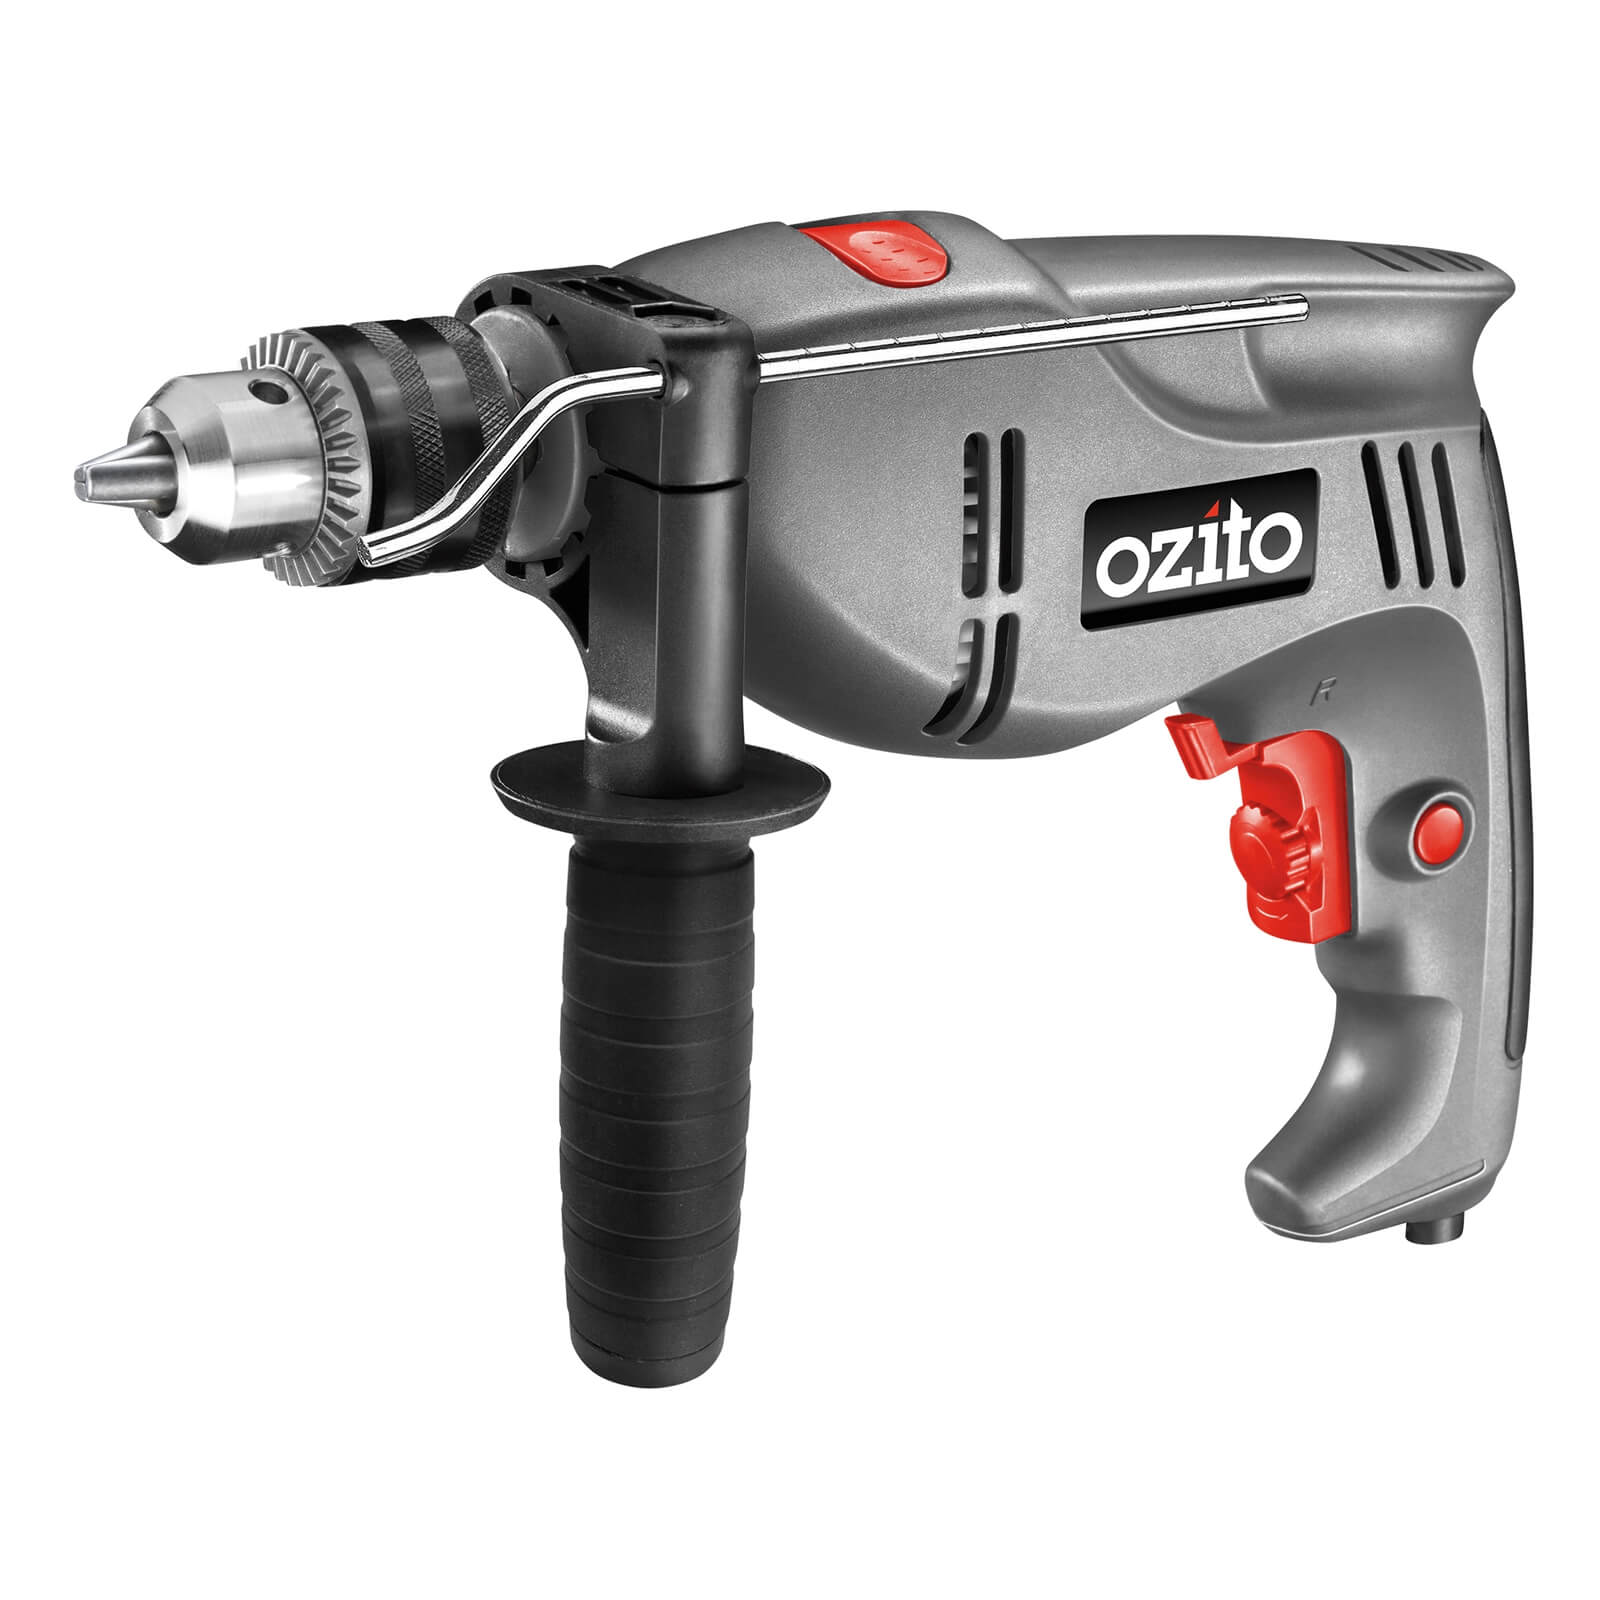 Ozito 710W Hammer Drill